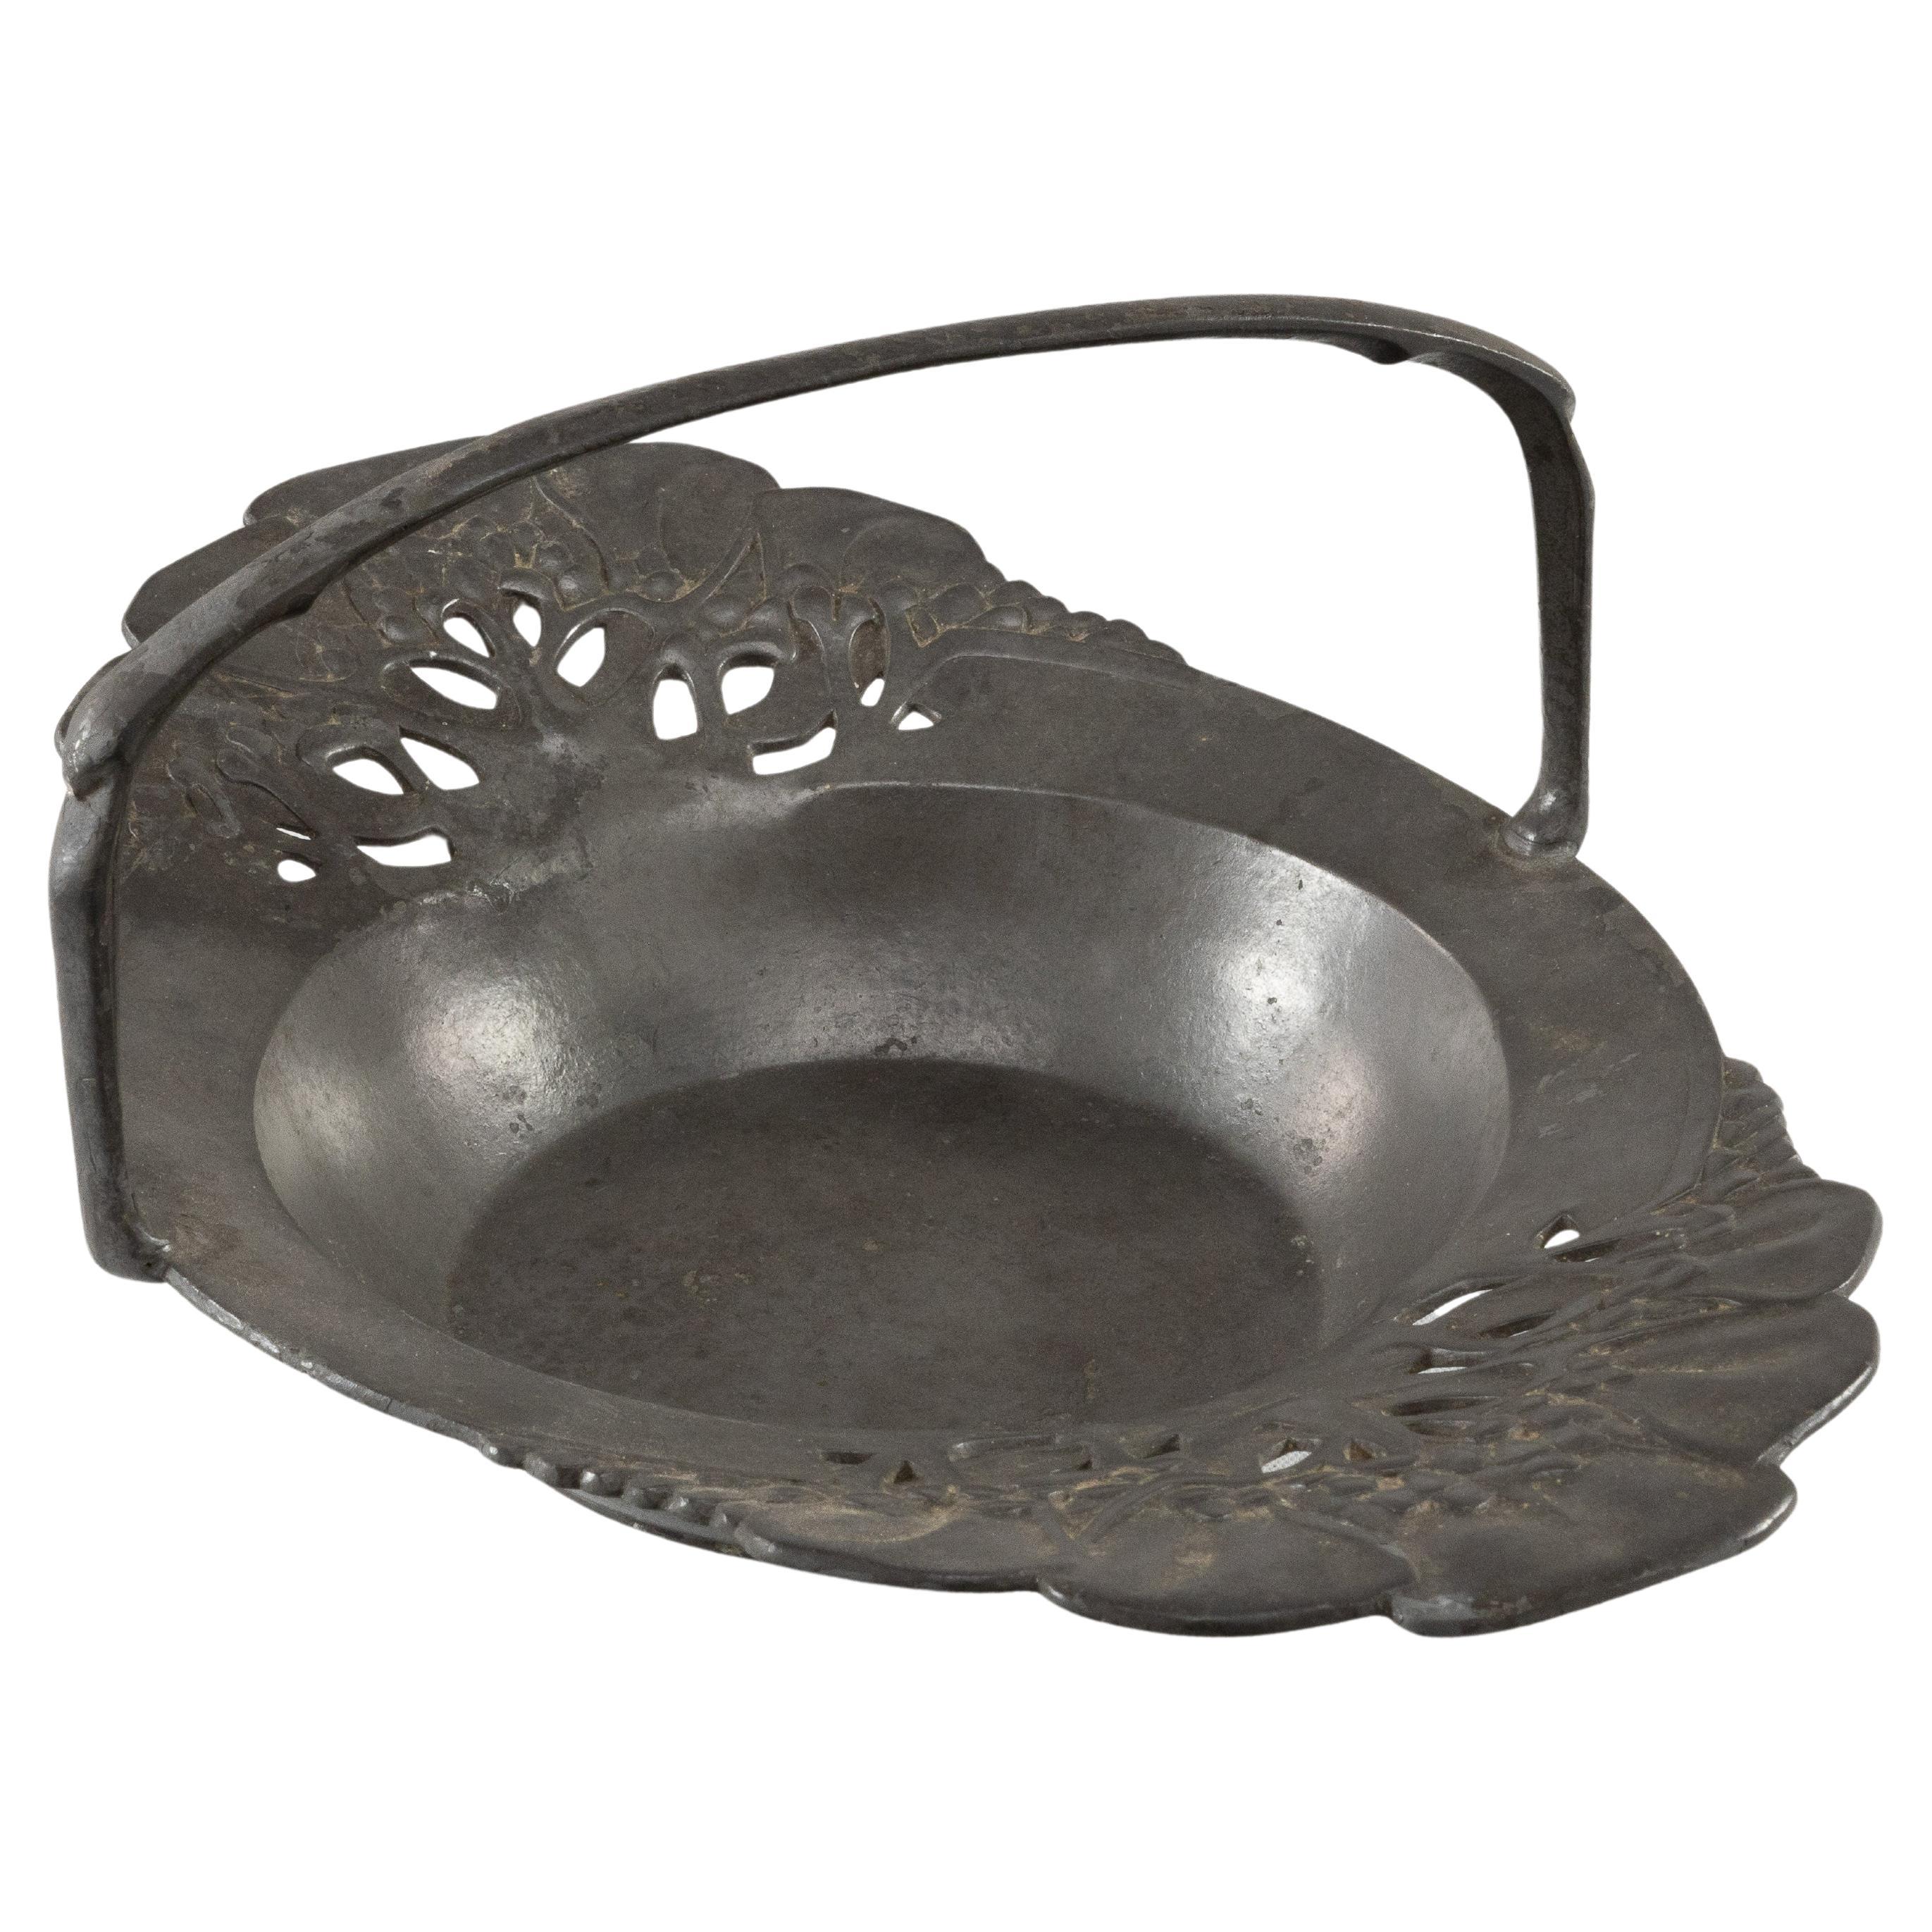 Urania. An Art Nouveau pewter fruit bowl with a loop handle floral decoration